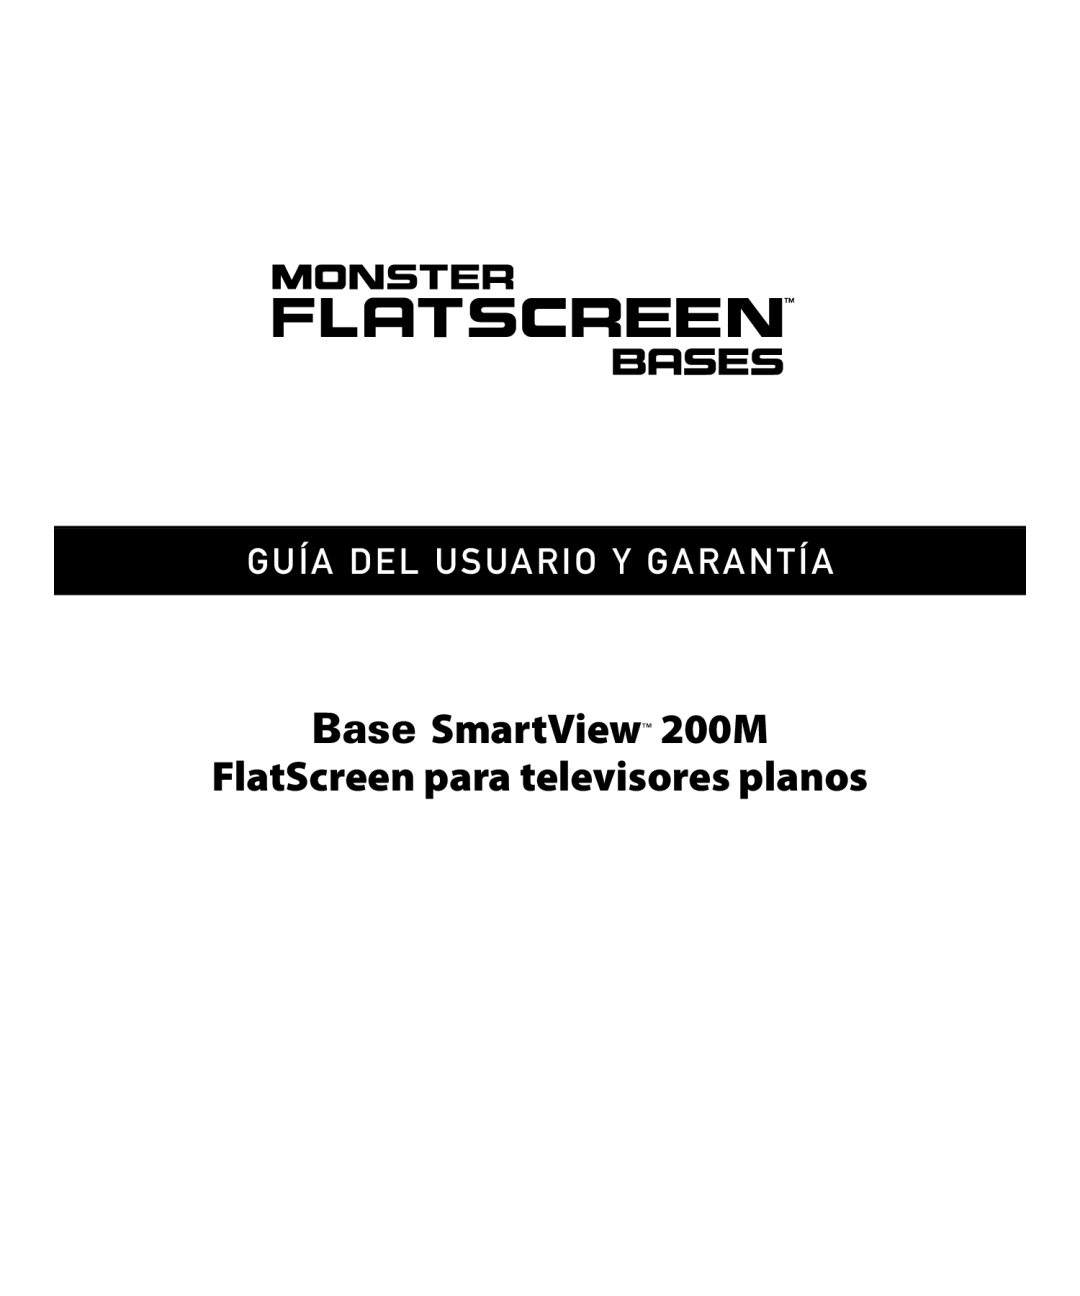 Monster Cable warranty Guía Del Usuario Y Garantía, Base SmartView 200M FlatScreen para televisores planos 